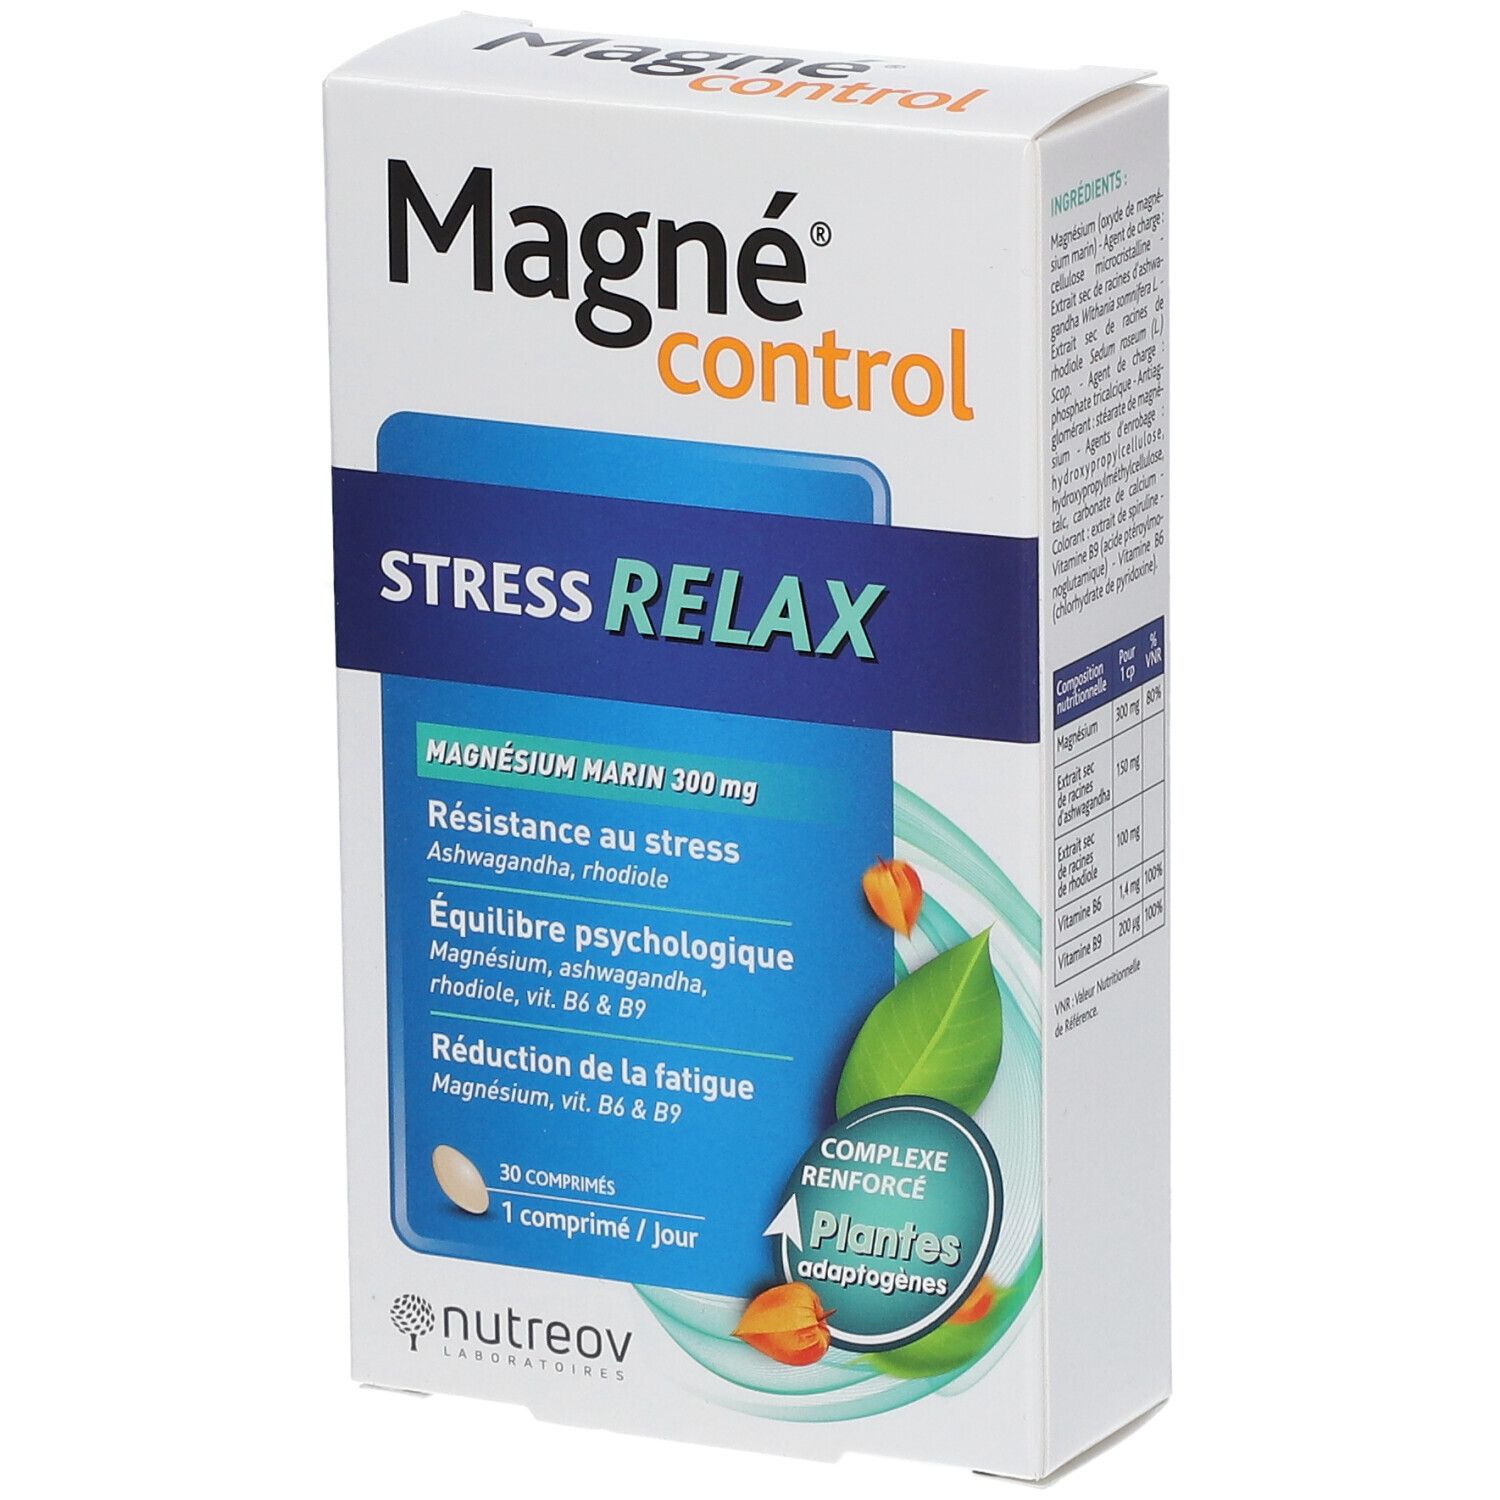 Nutreov Magné® Control Stress Relax